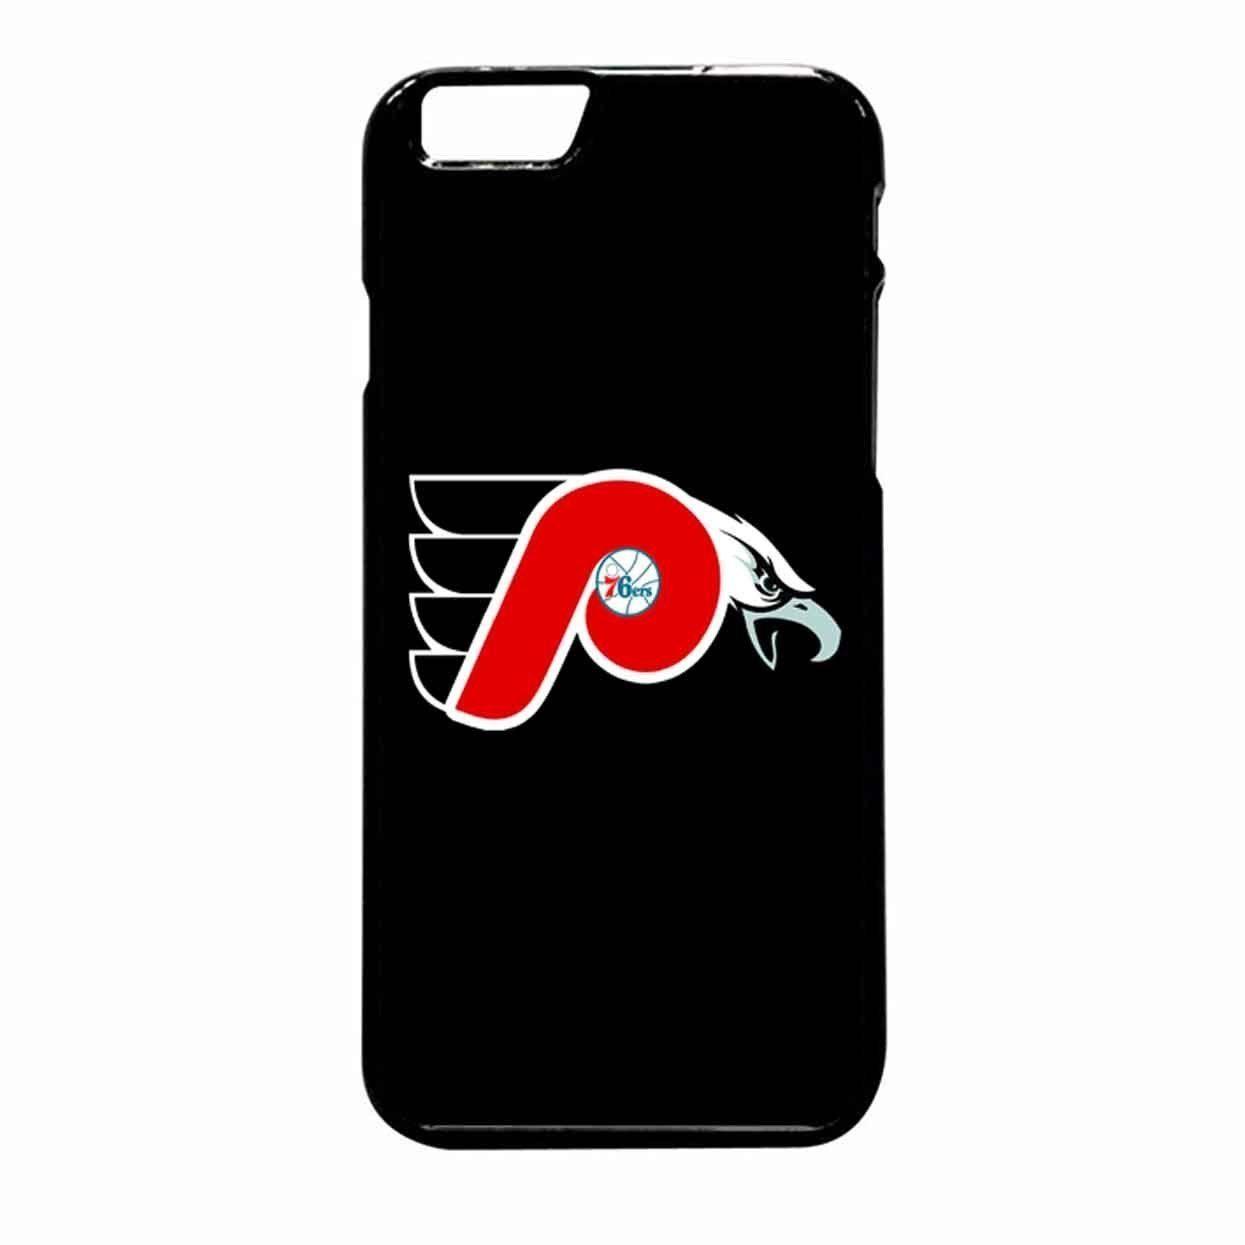 Eagles Phillies Flyers Combined Logo - Amazon.com: 76ers Phillies Flyers Eagles Case / Color Black Rubber ...